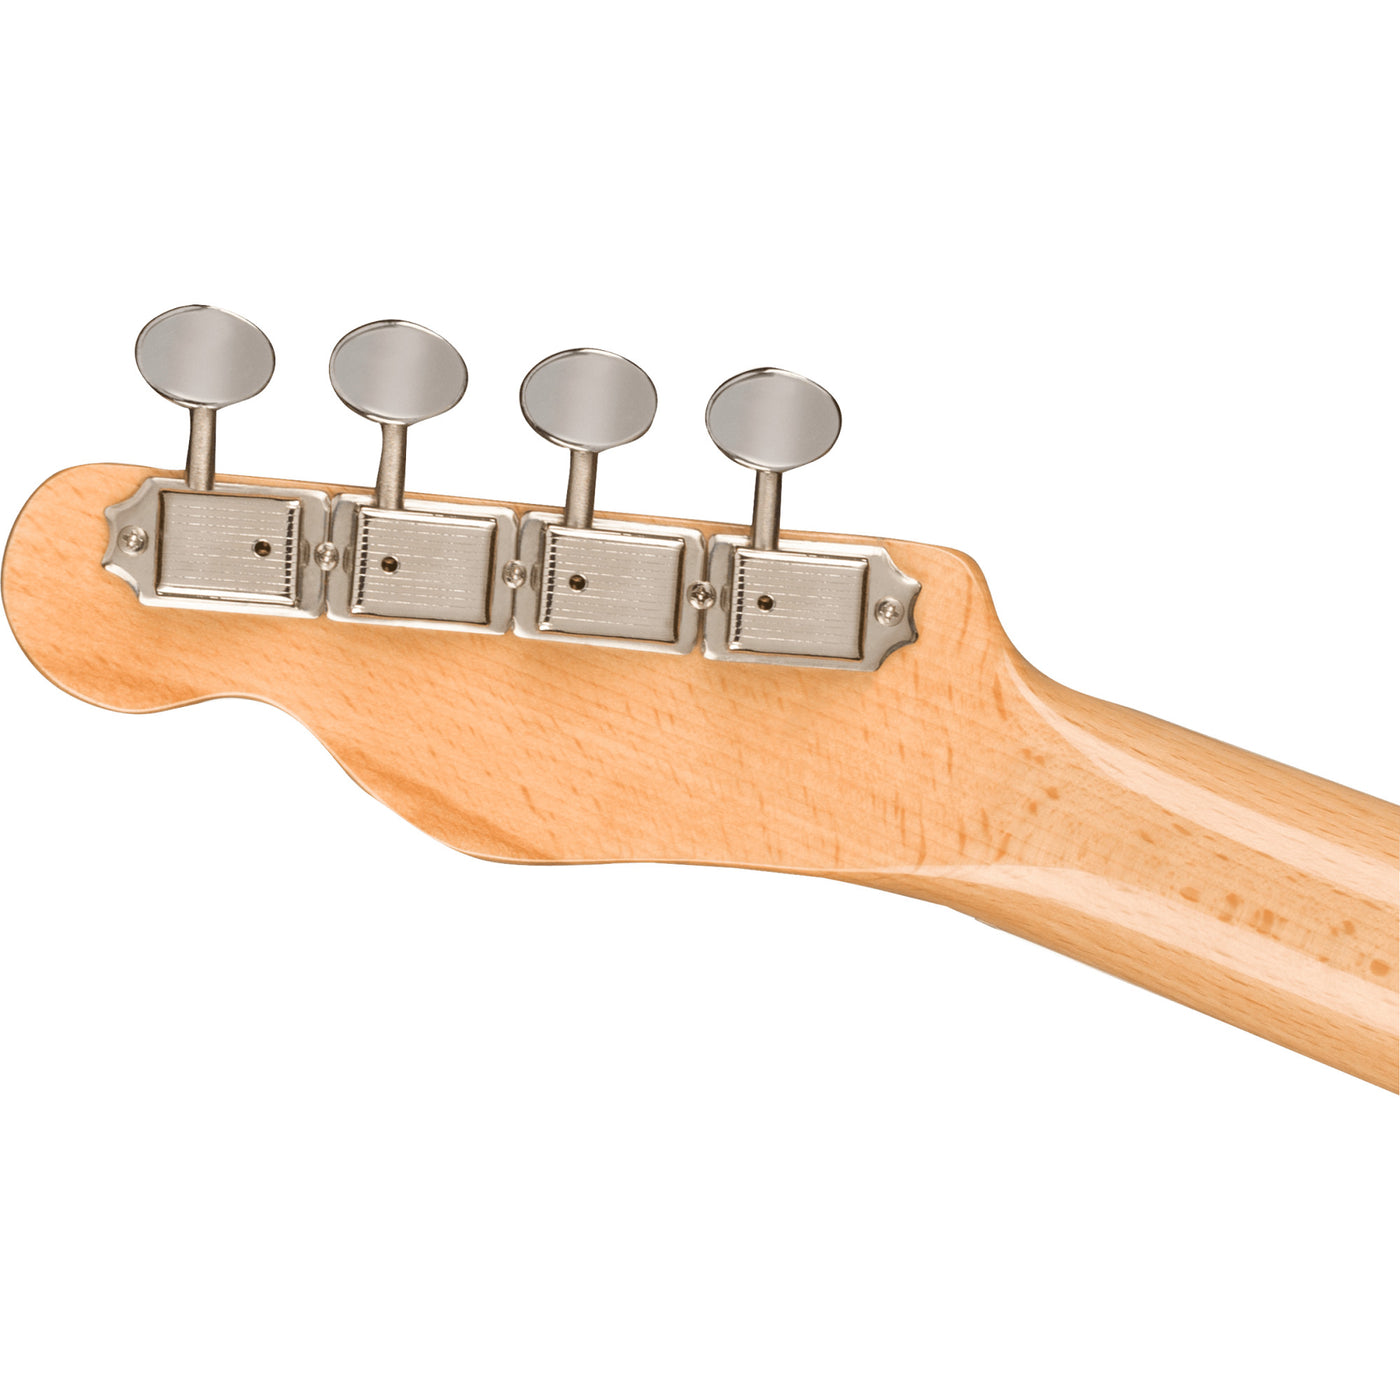 Fender Fullerton Tele Uke, Butterscotch Blonde (0971653050)